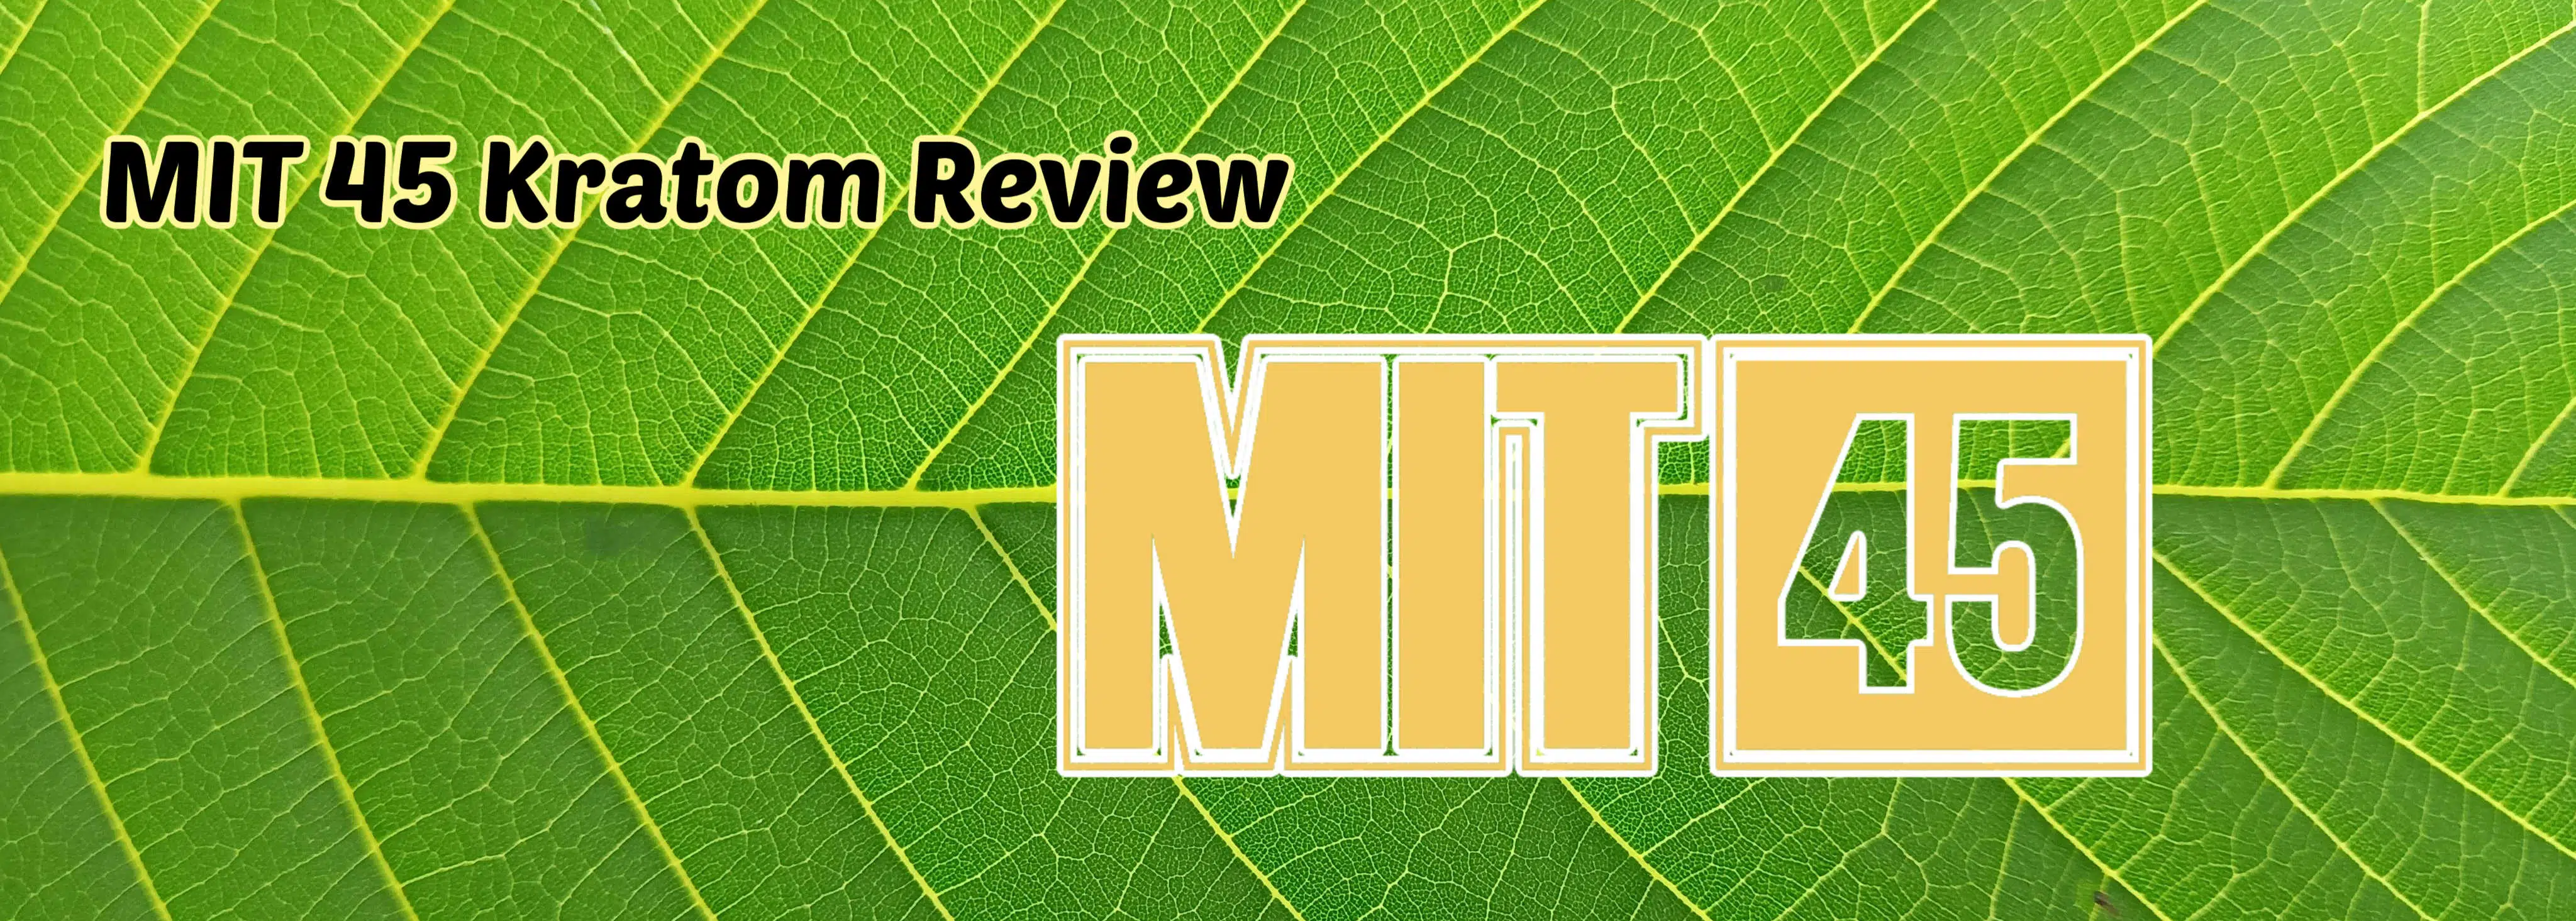 image of mit 45 kratom review